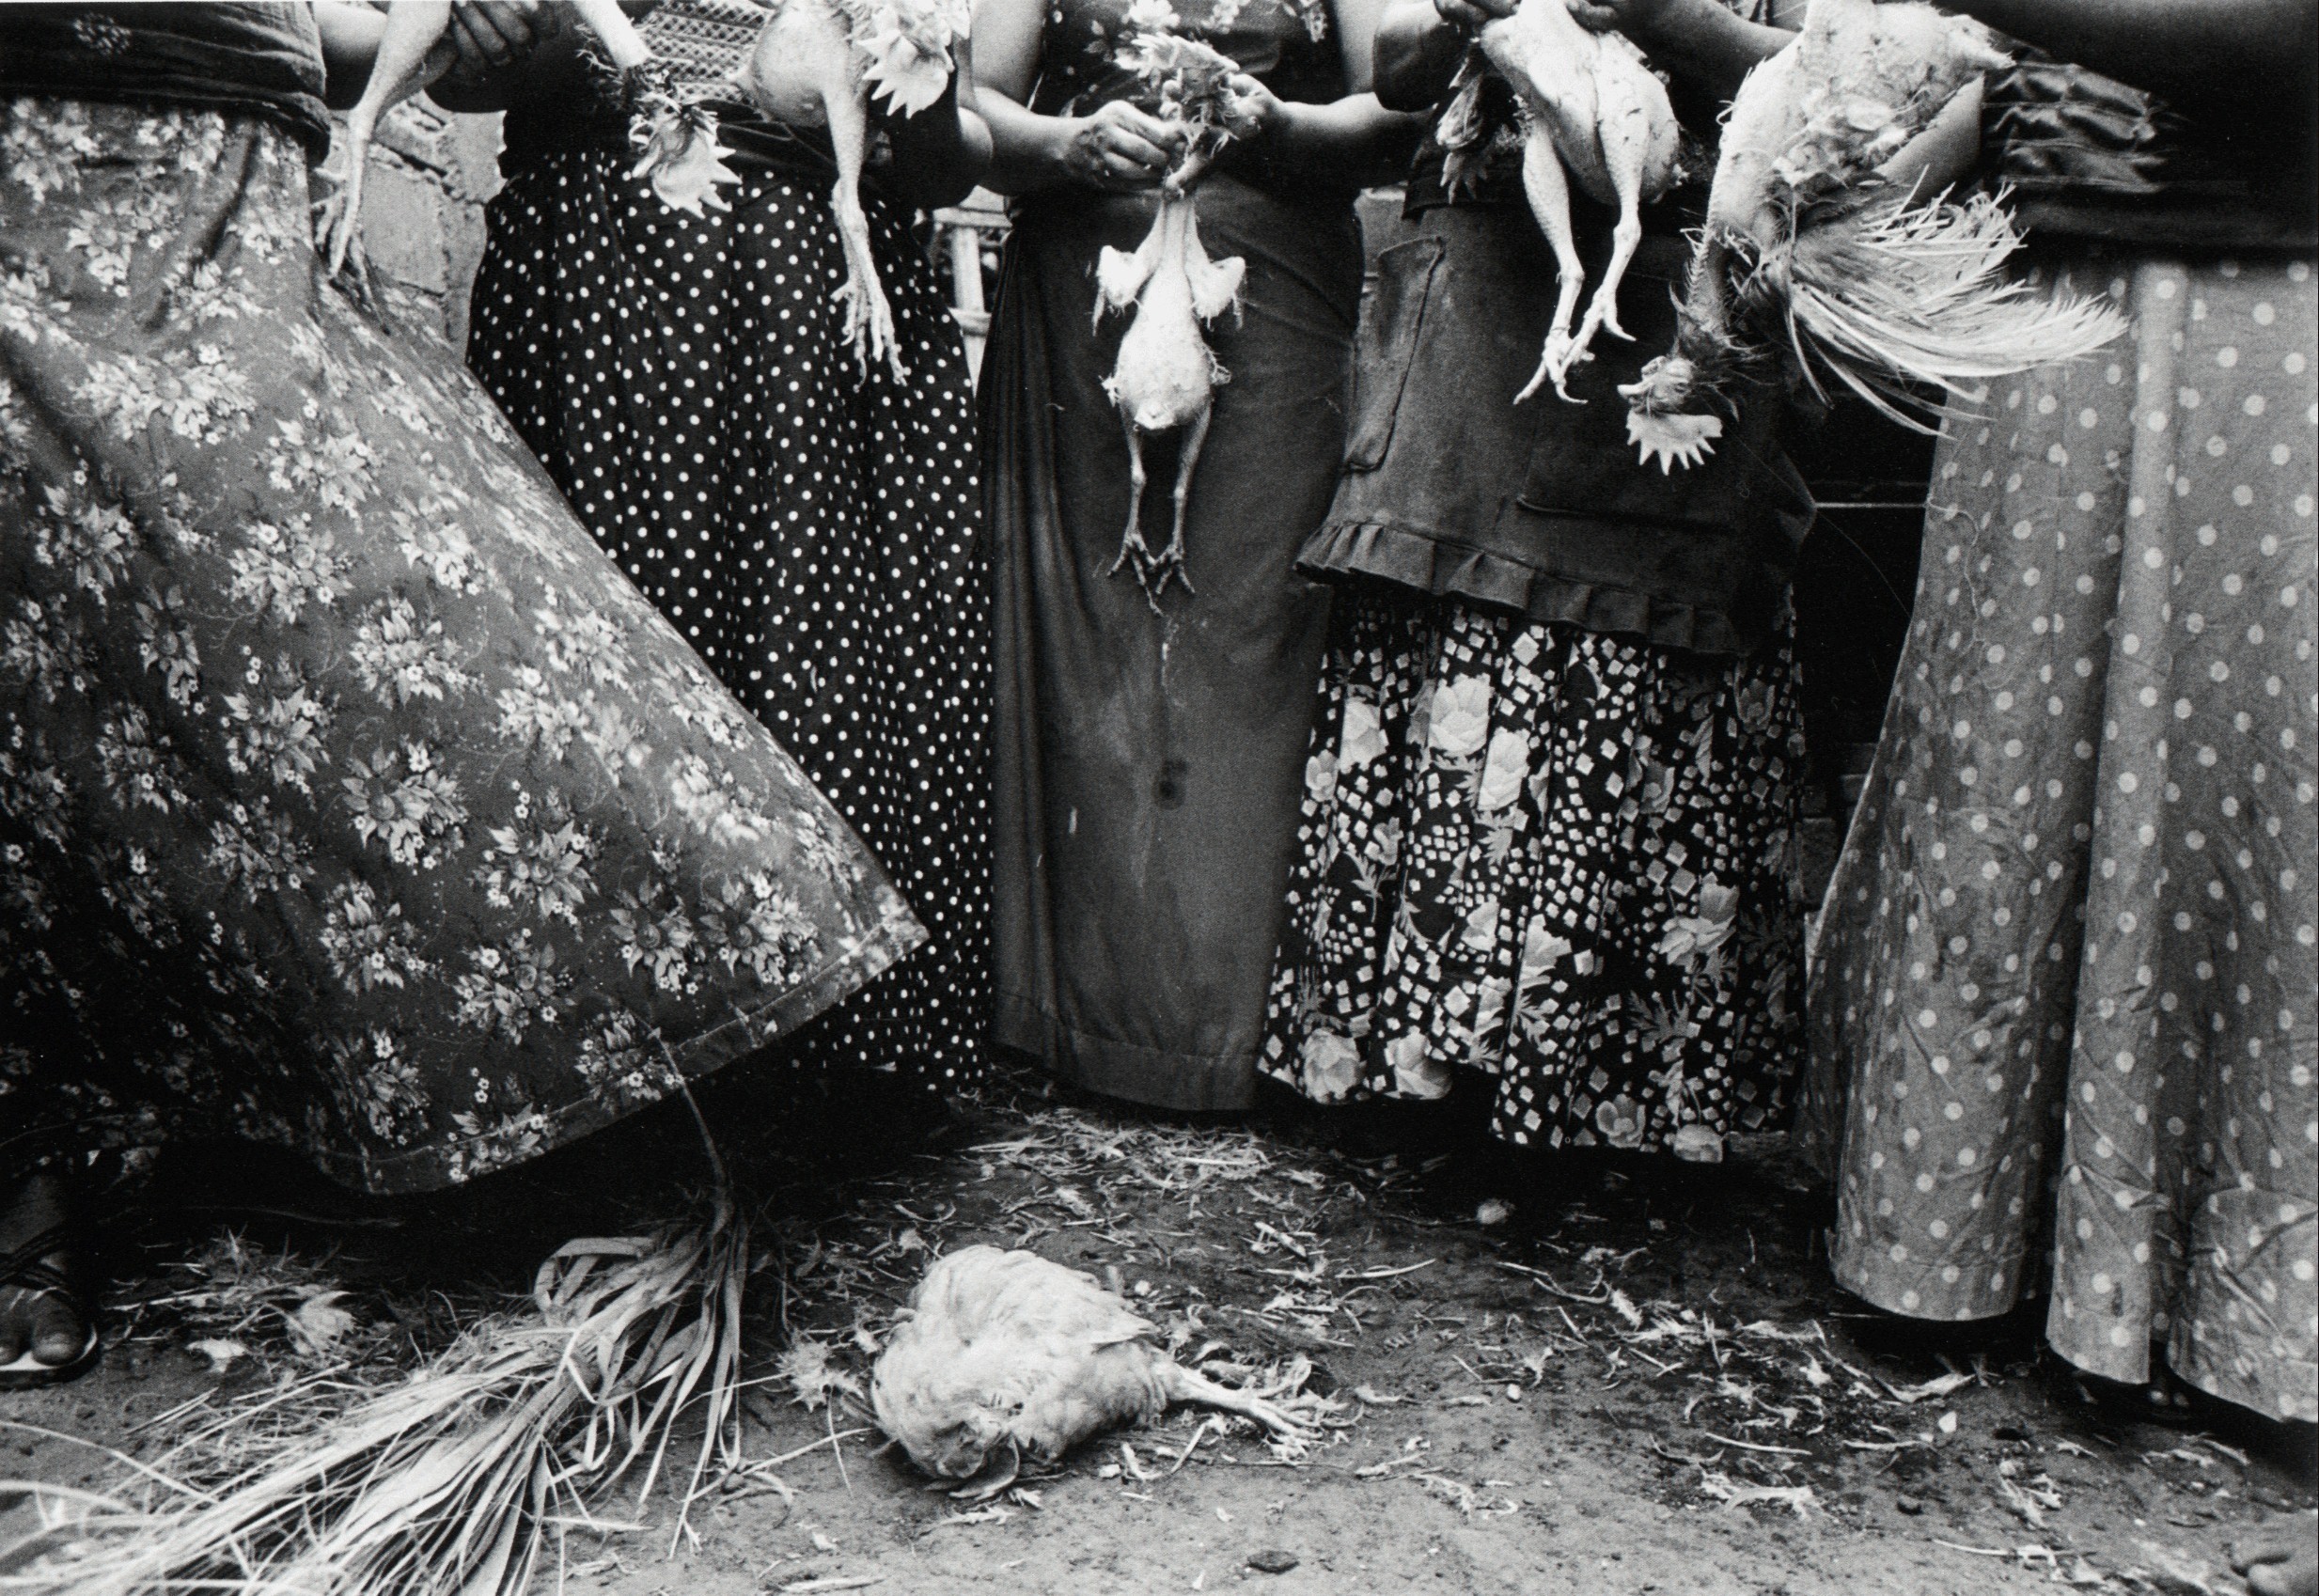 Ощипывание кур. Хучитан, Оахака, Мексика, 1986. Фотограф Грасьела Итурбиде